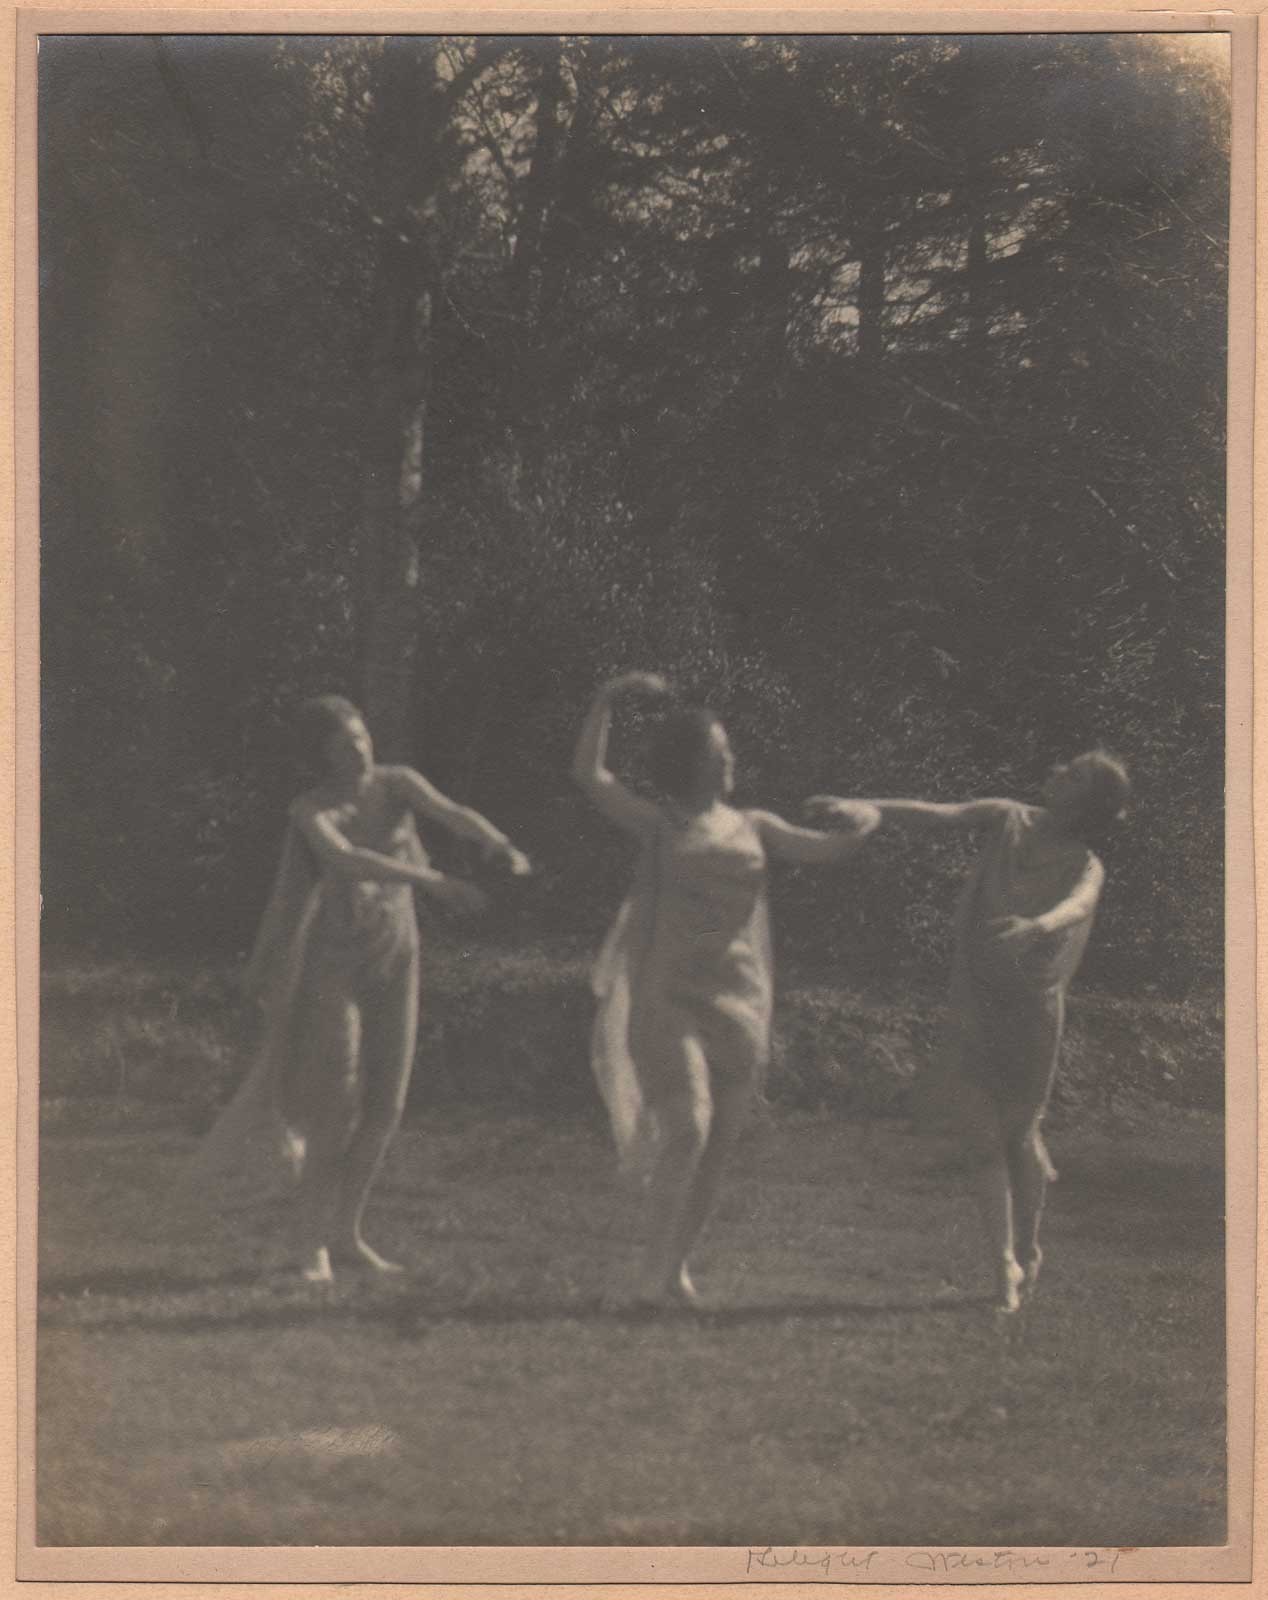 Delight Weston :: Three Dancers: Rhythmic Study, 1921. Bromide print. | src Photoseed